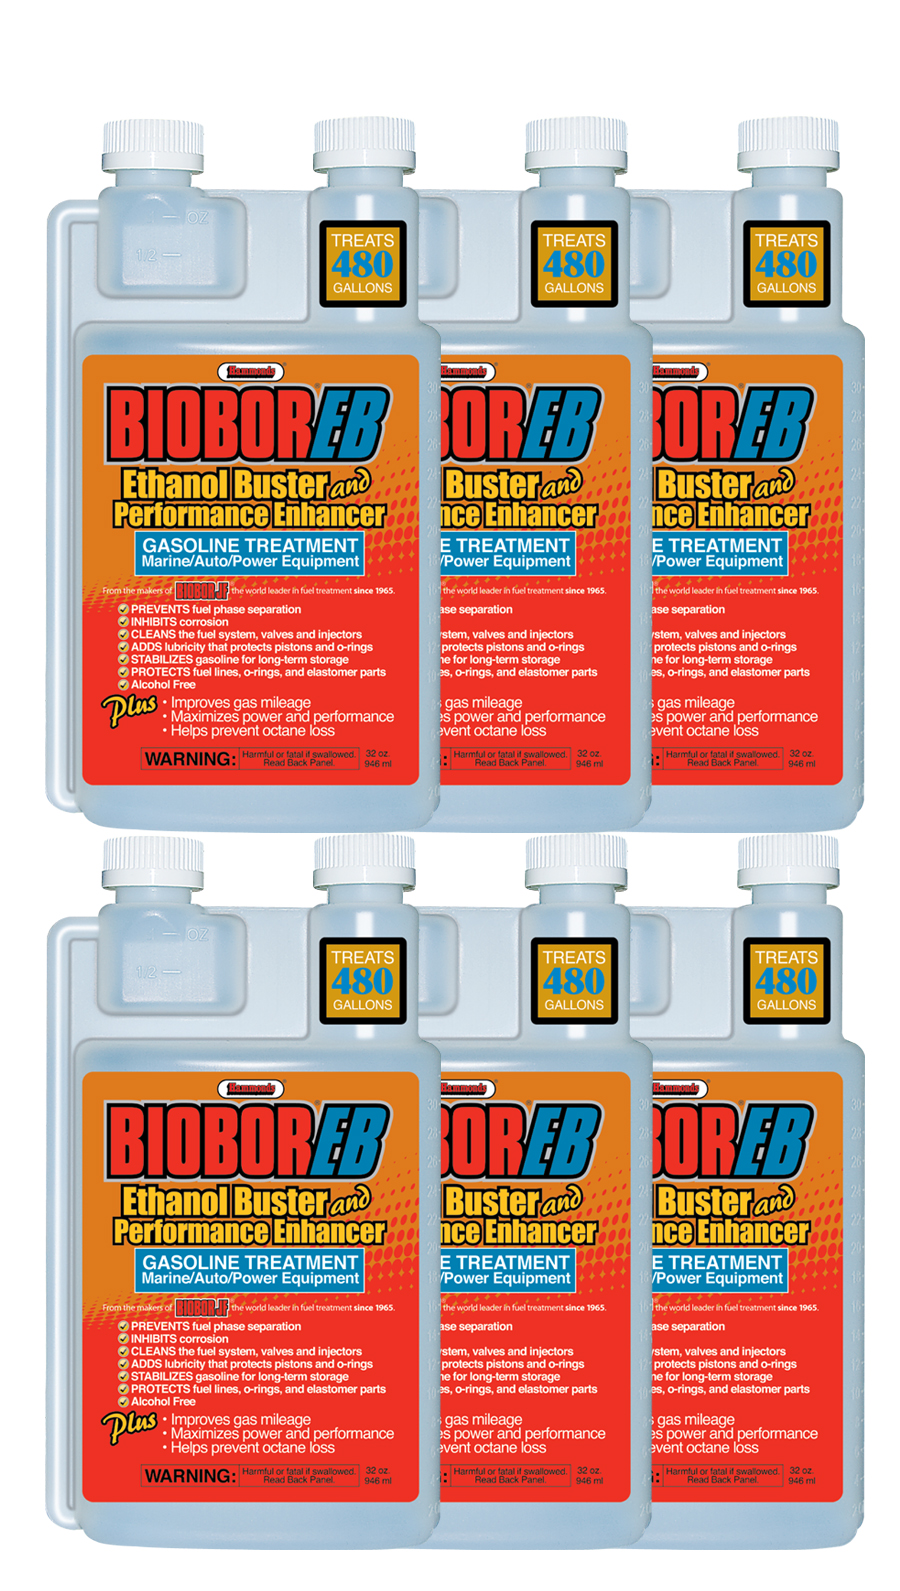 Biobor EB 32 oz. (6 Pack) Ethanol Buster and Performance Enhancer